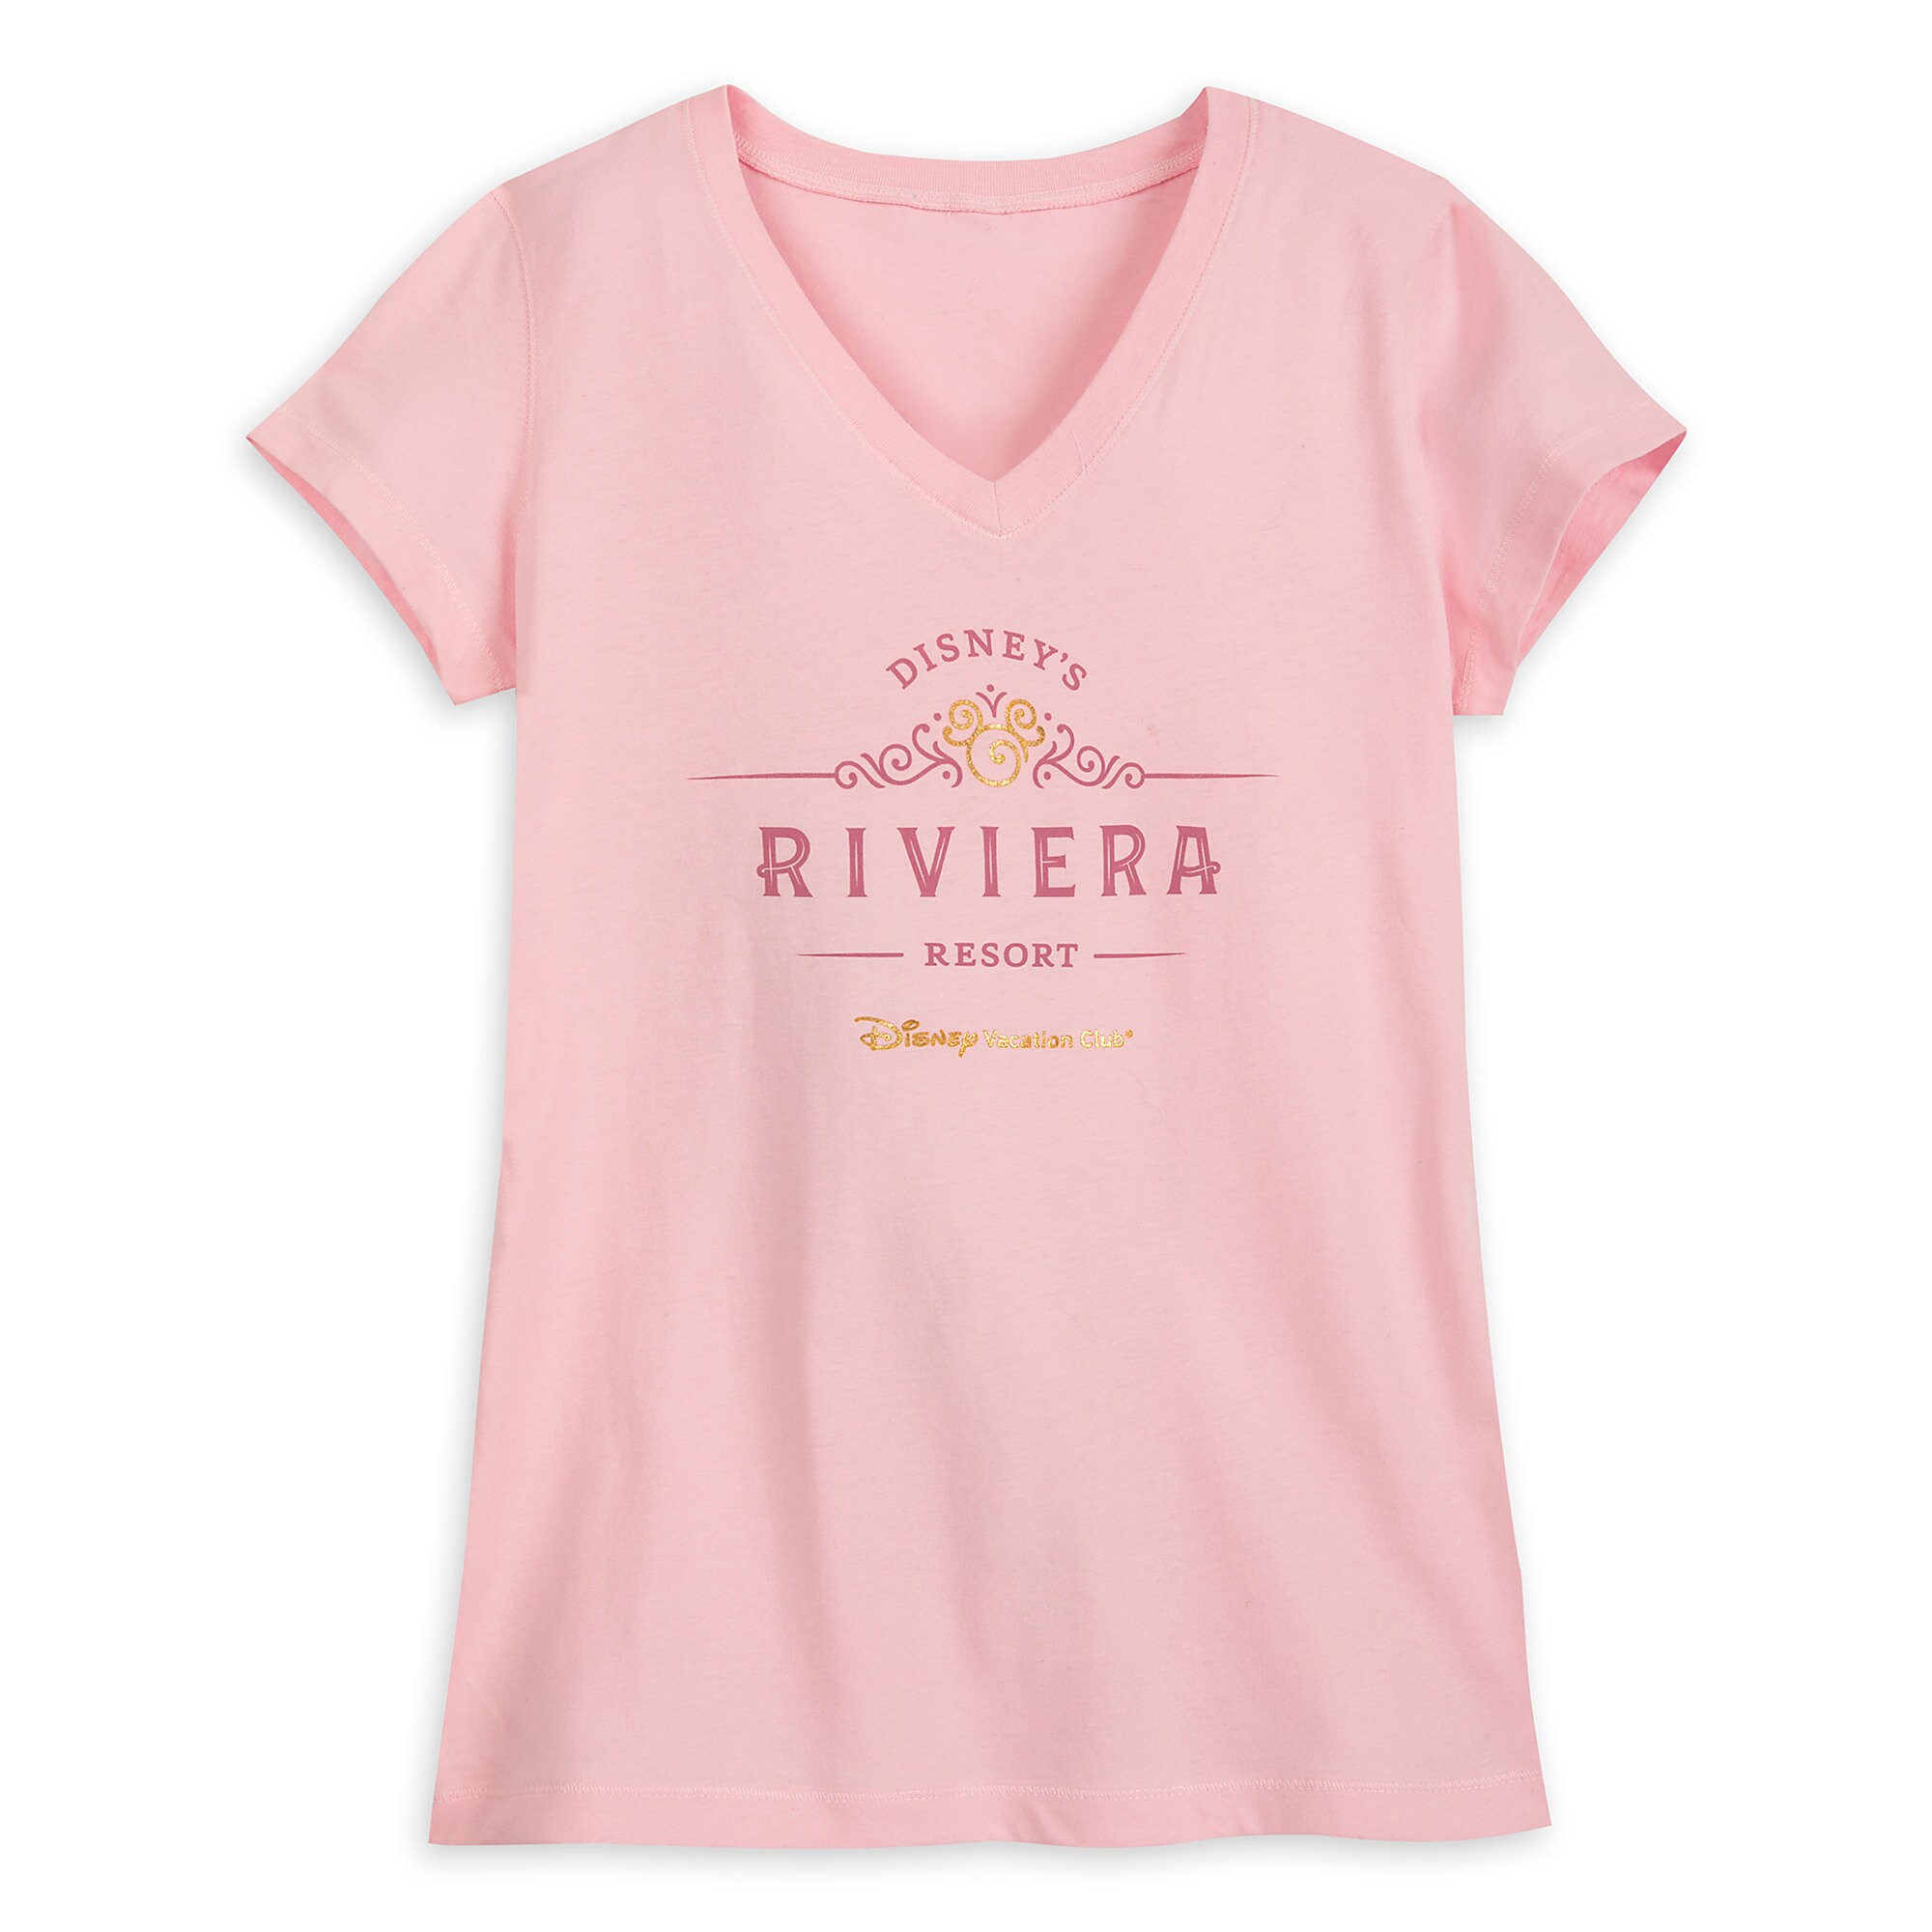 Disney's Riviera Resort T-Shirt for Women - Disney Vacation Club